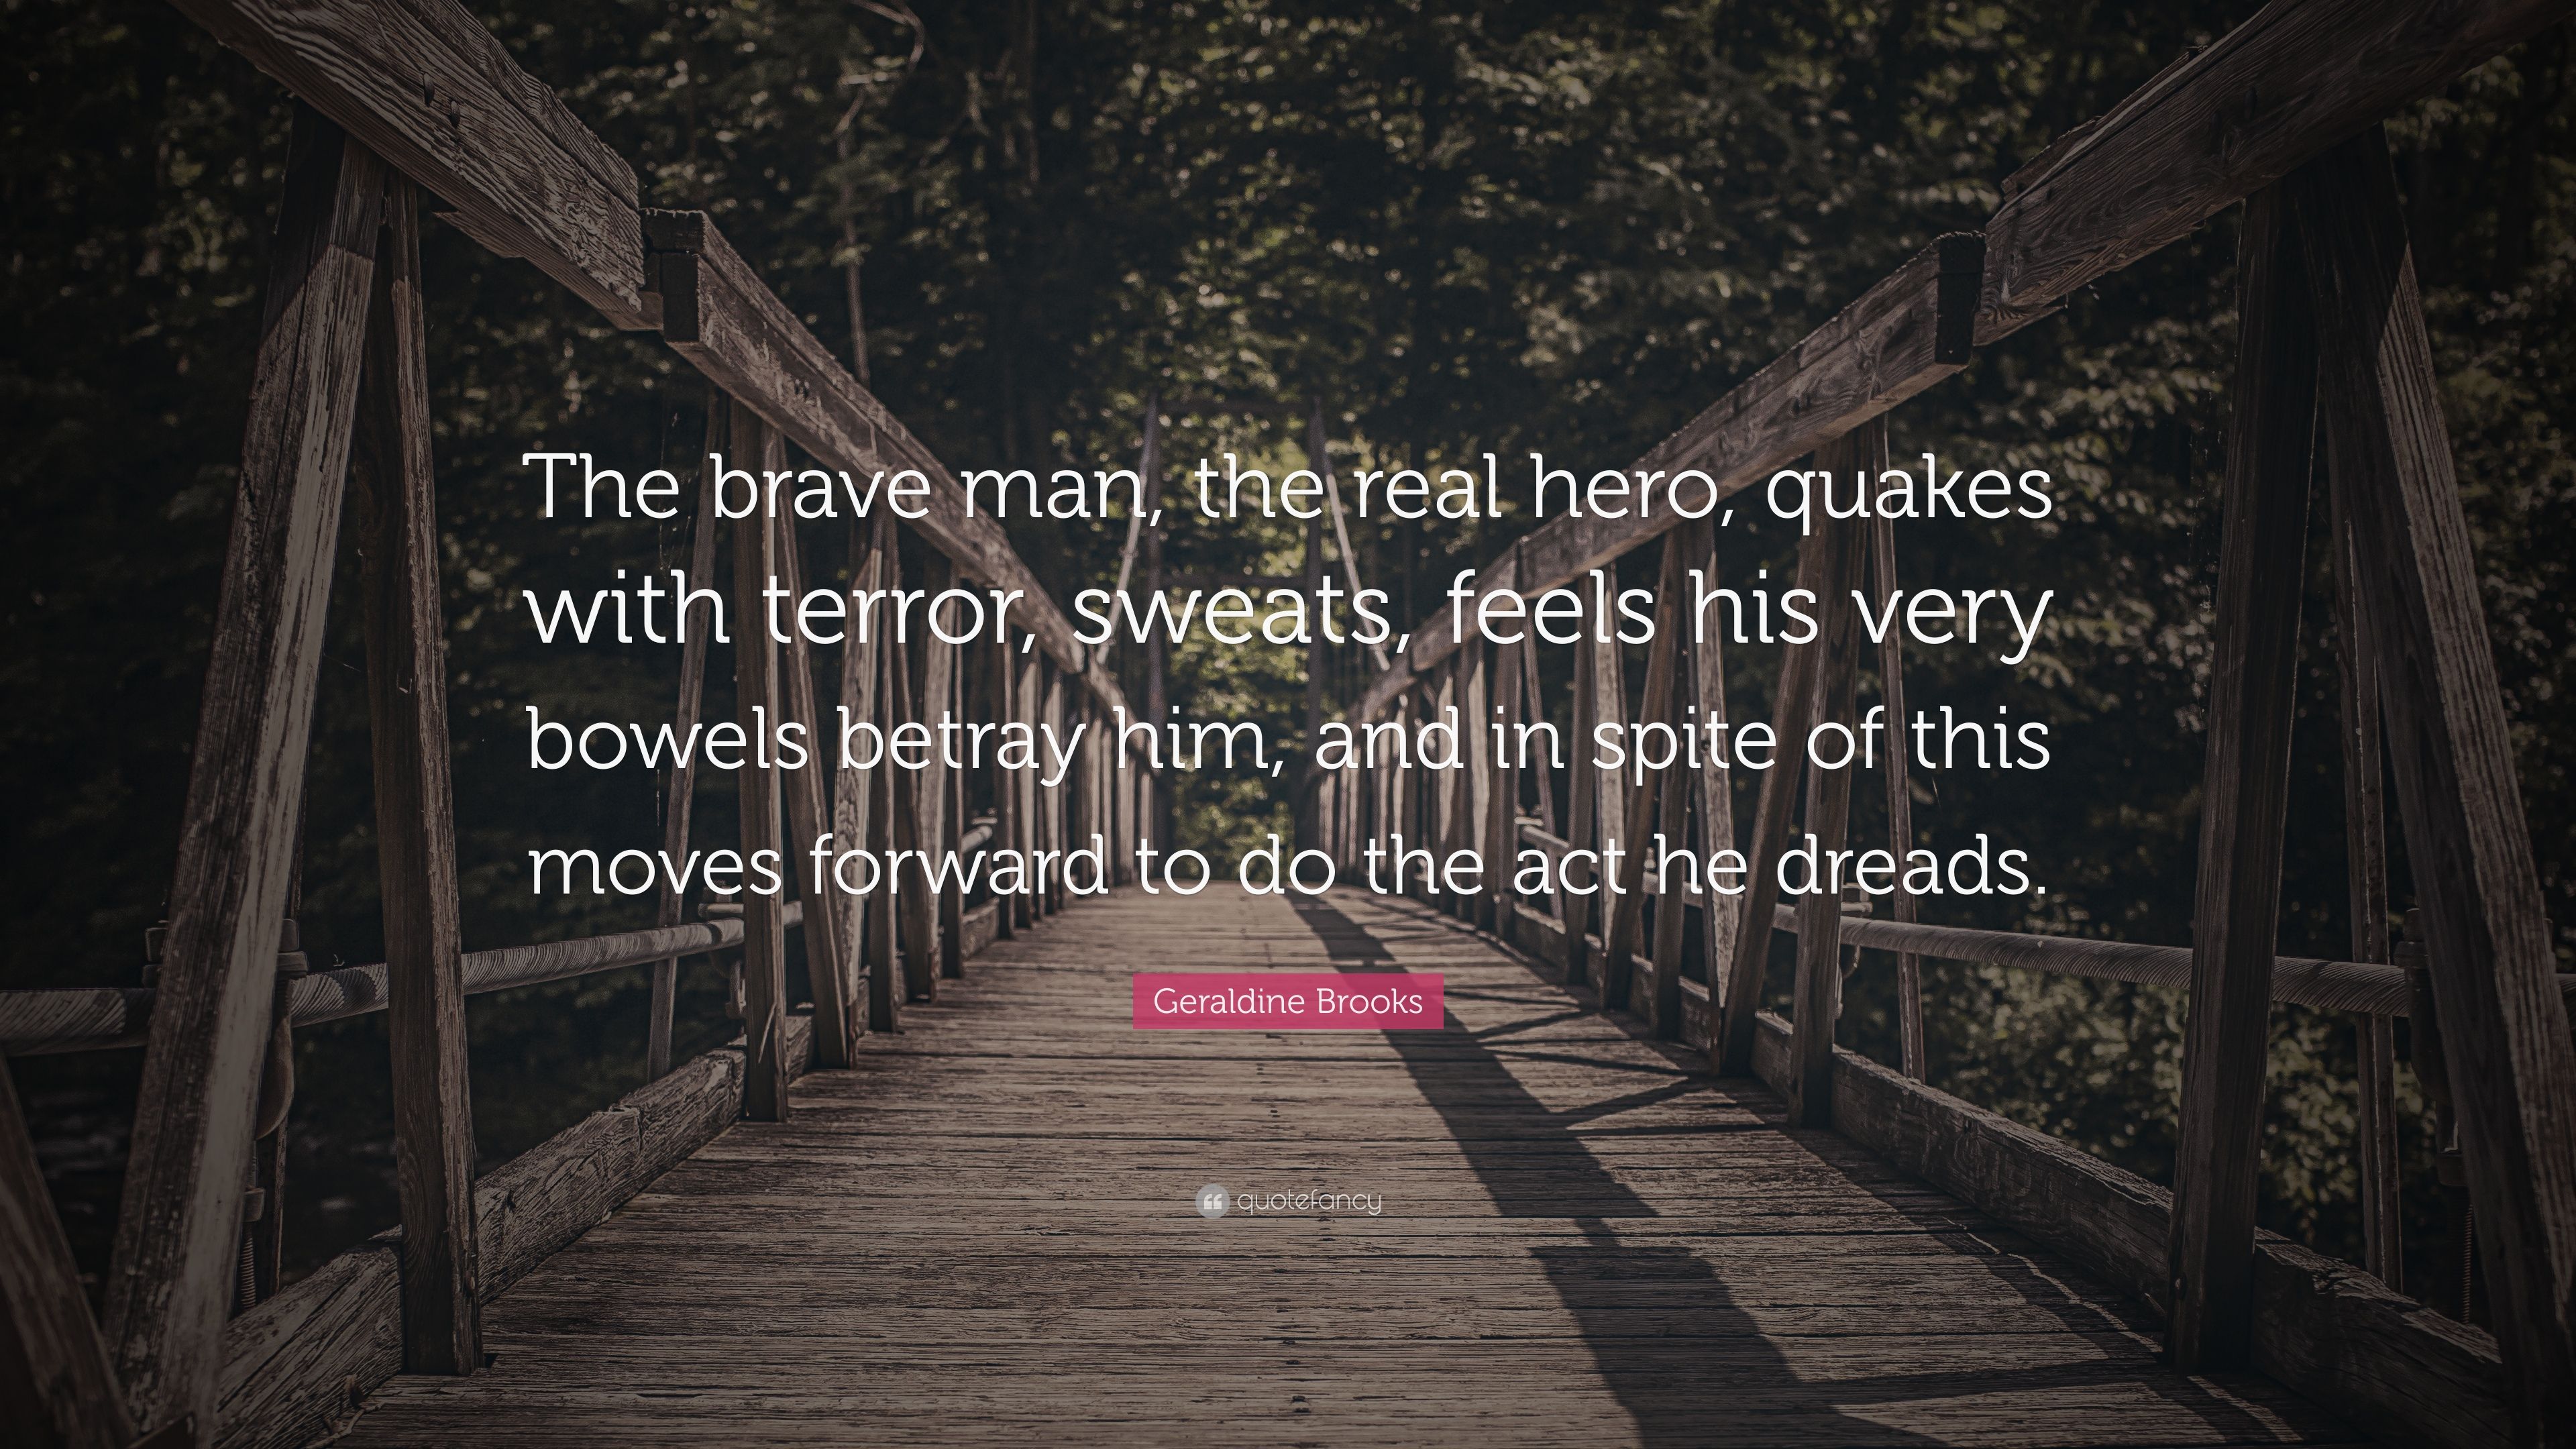 Geraldine Brooks Quote: “The brave man, the real hero, quakes